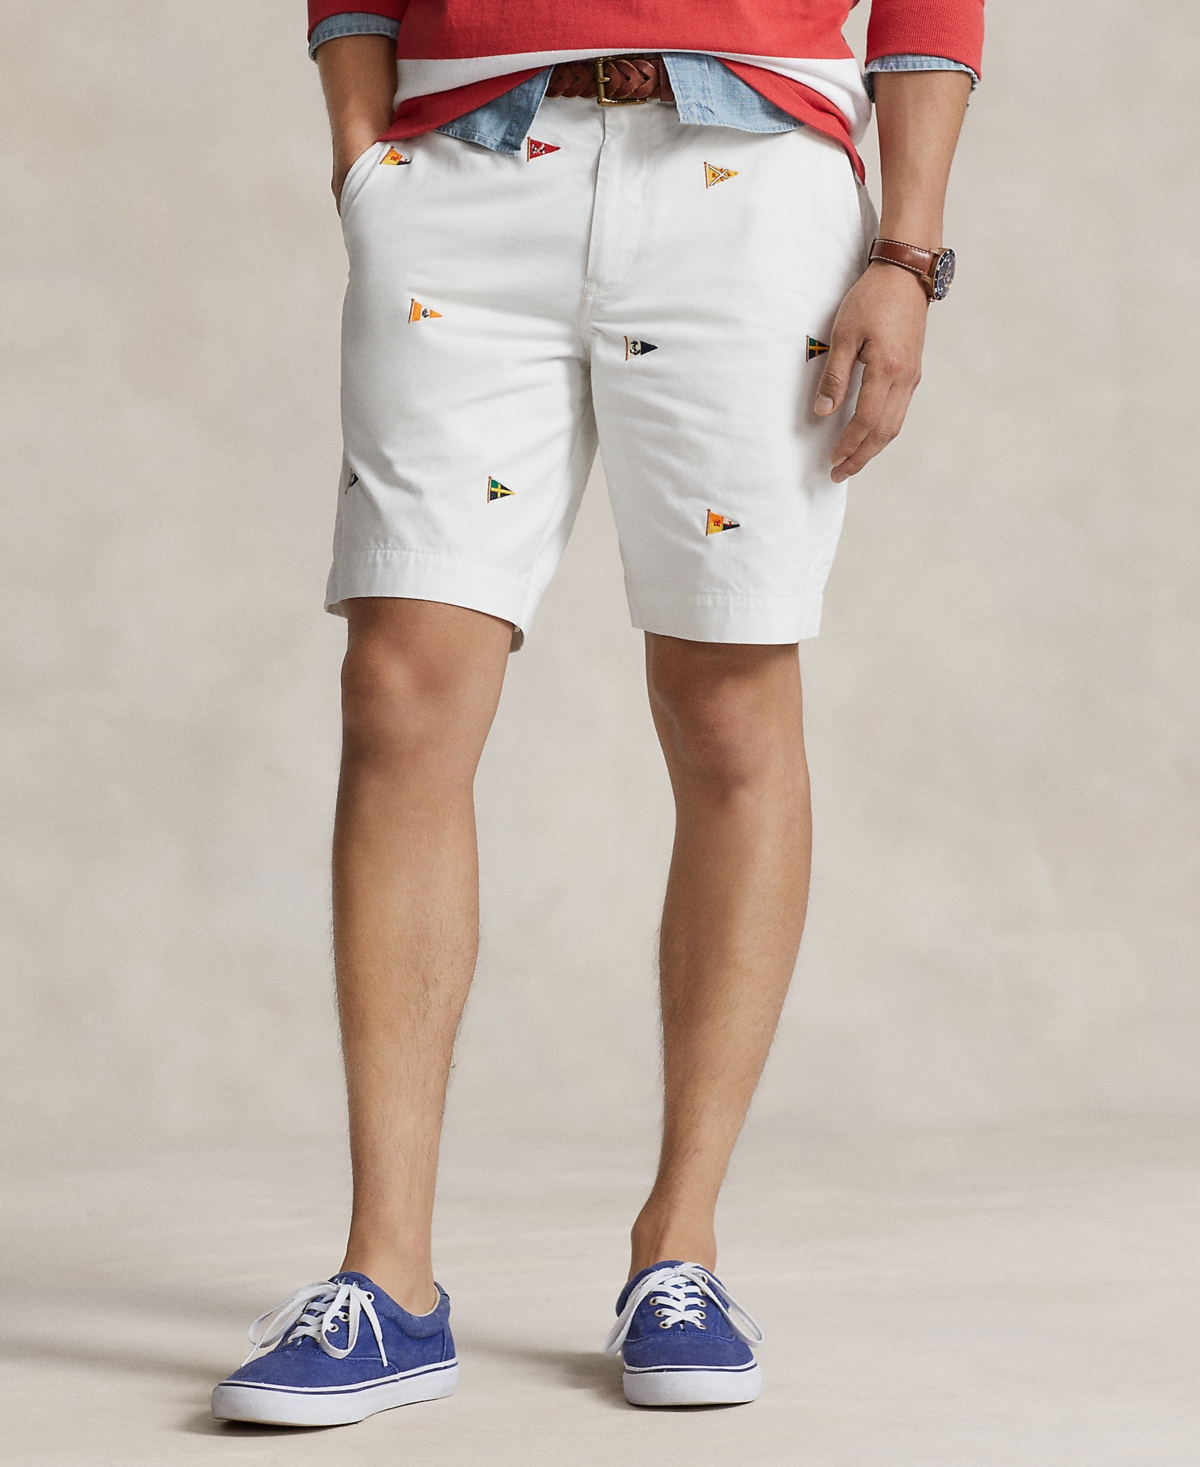 POLO RALPH LAUREN Shorts for Men